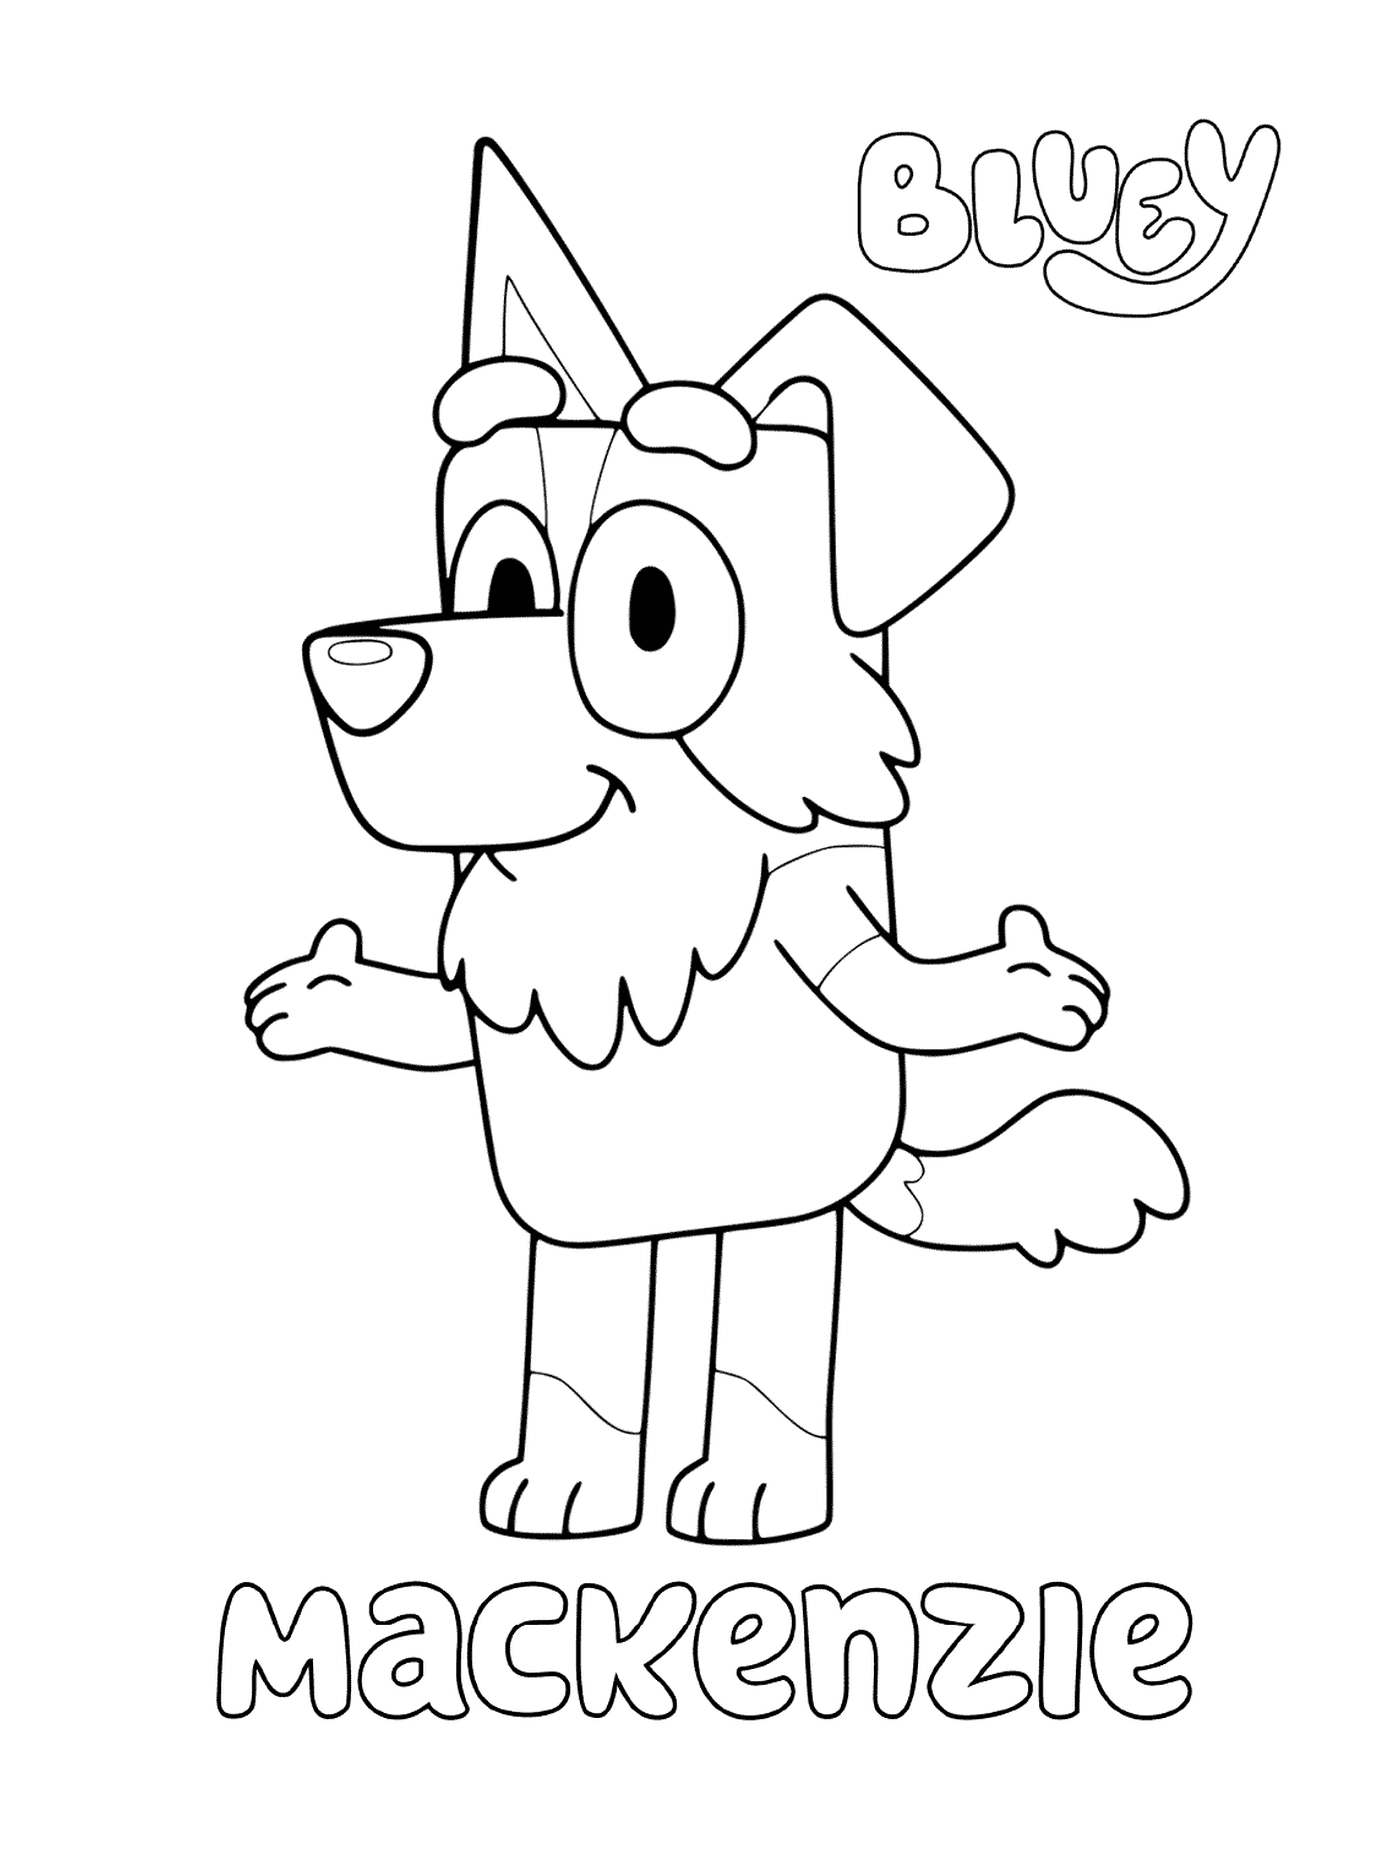  Ein Cartoon-Hund namens Mackenzie 